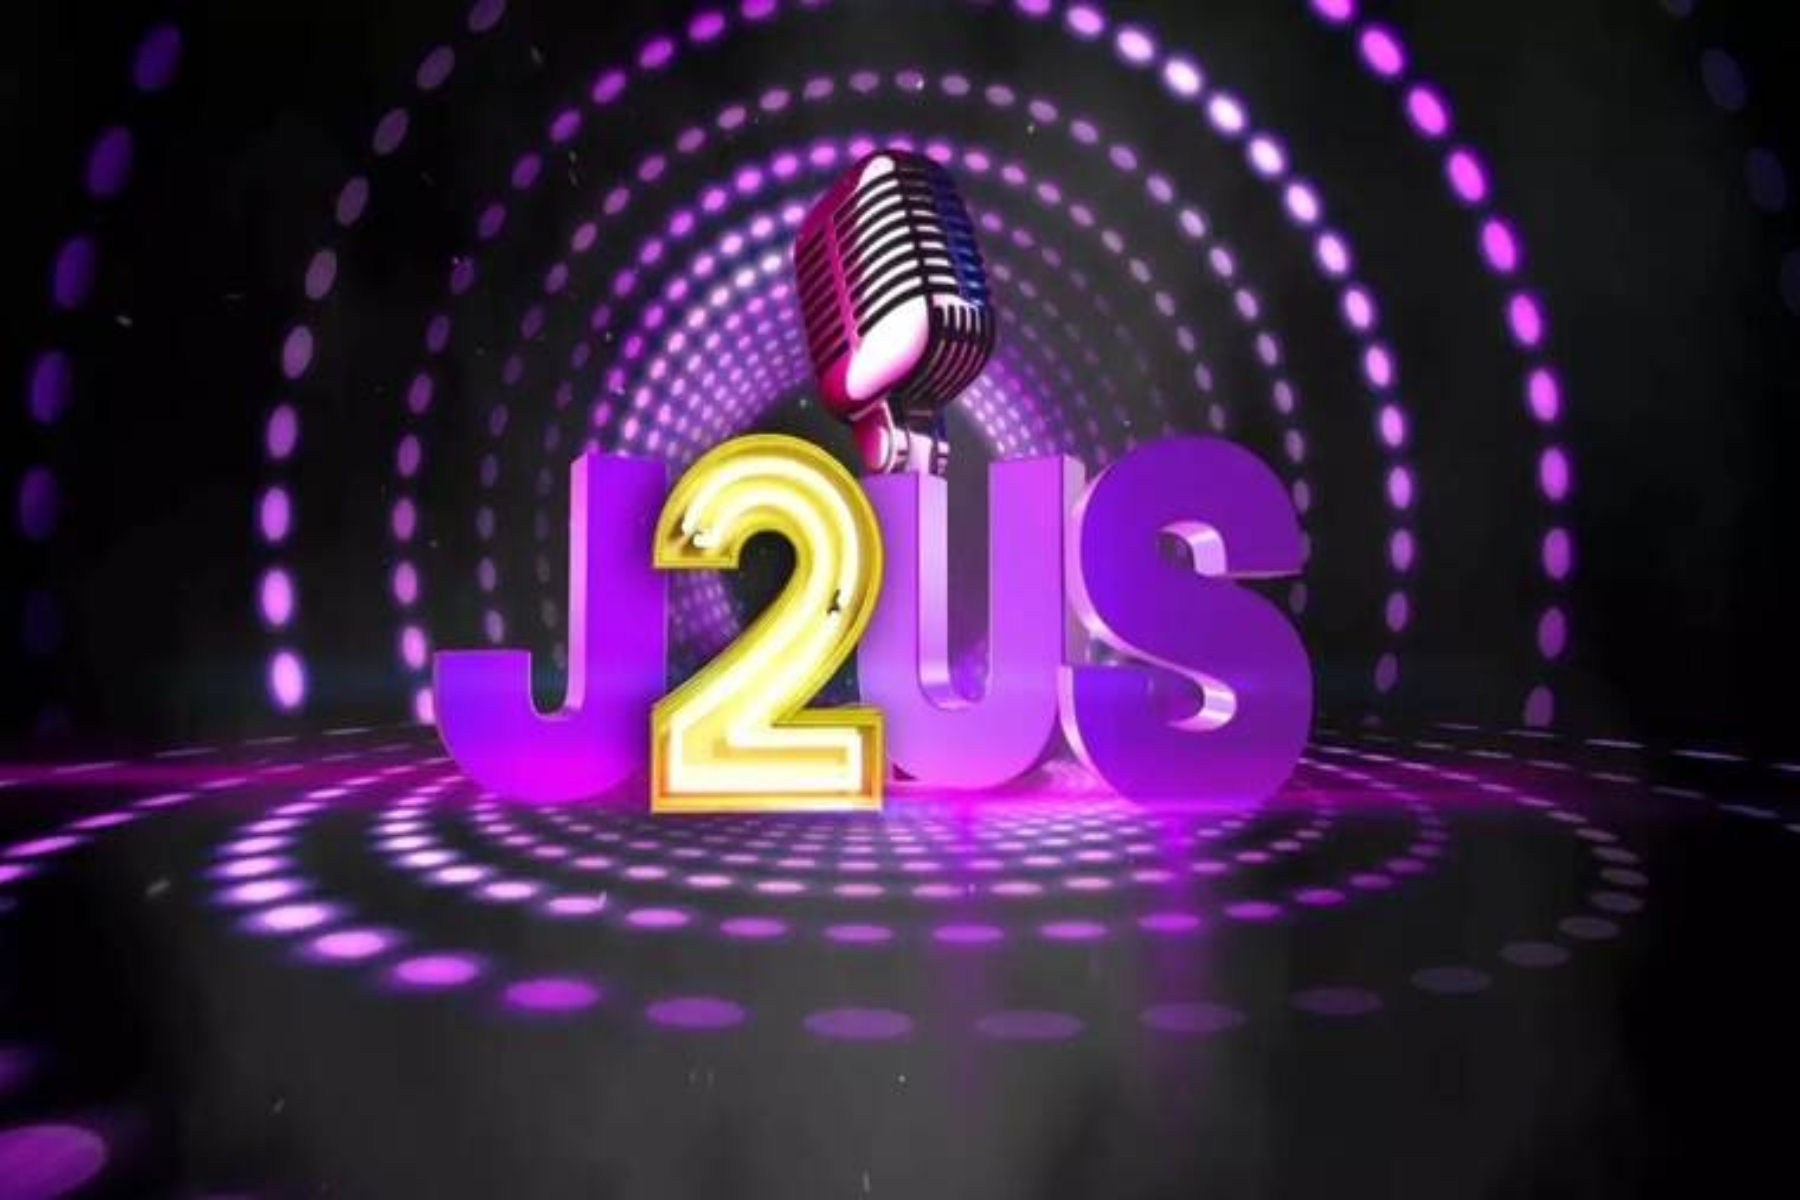 J2US: Οι εκπλήξεις δεν σταματούν στο πιο λαμπερό πάρτι της ελληνικής τηλεόρασης [trailer]